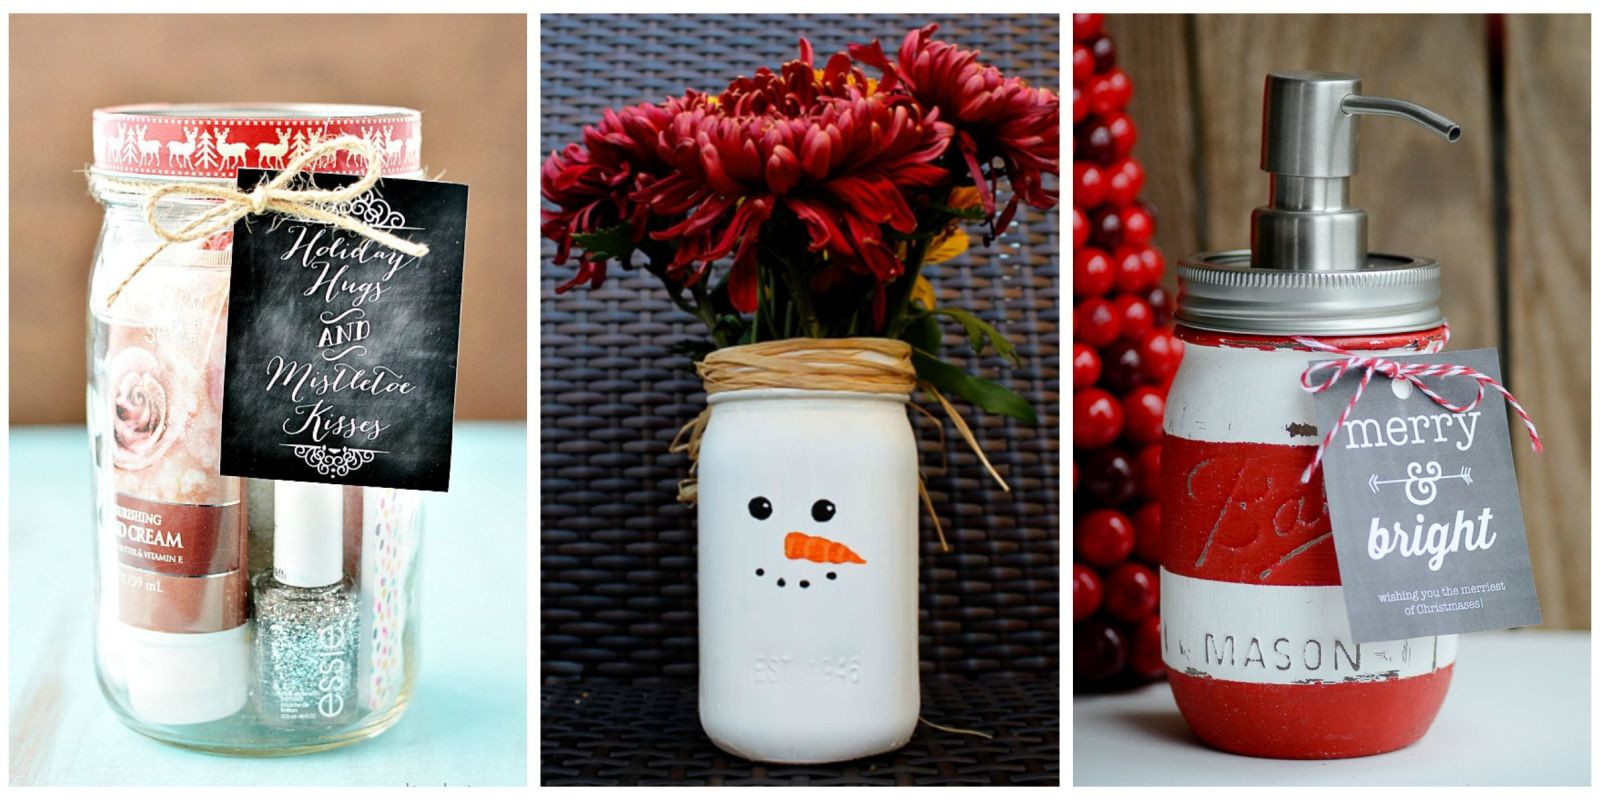 DIY Mason Jar Christmas Gifts
 25 DIY Mason Jar Gift Ideas Homemade Christmas Gifts in